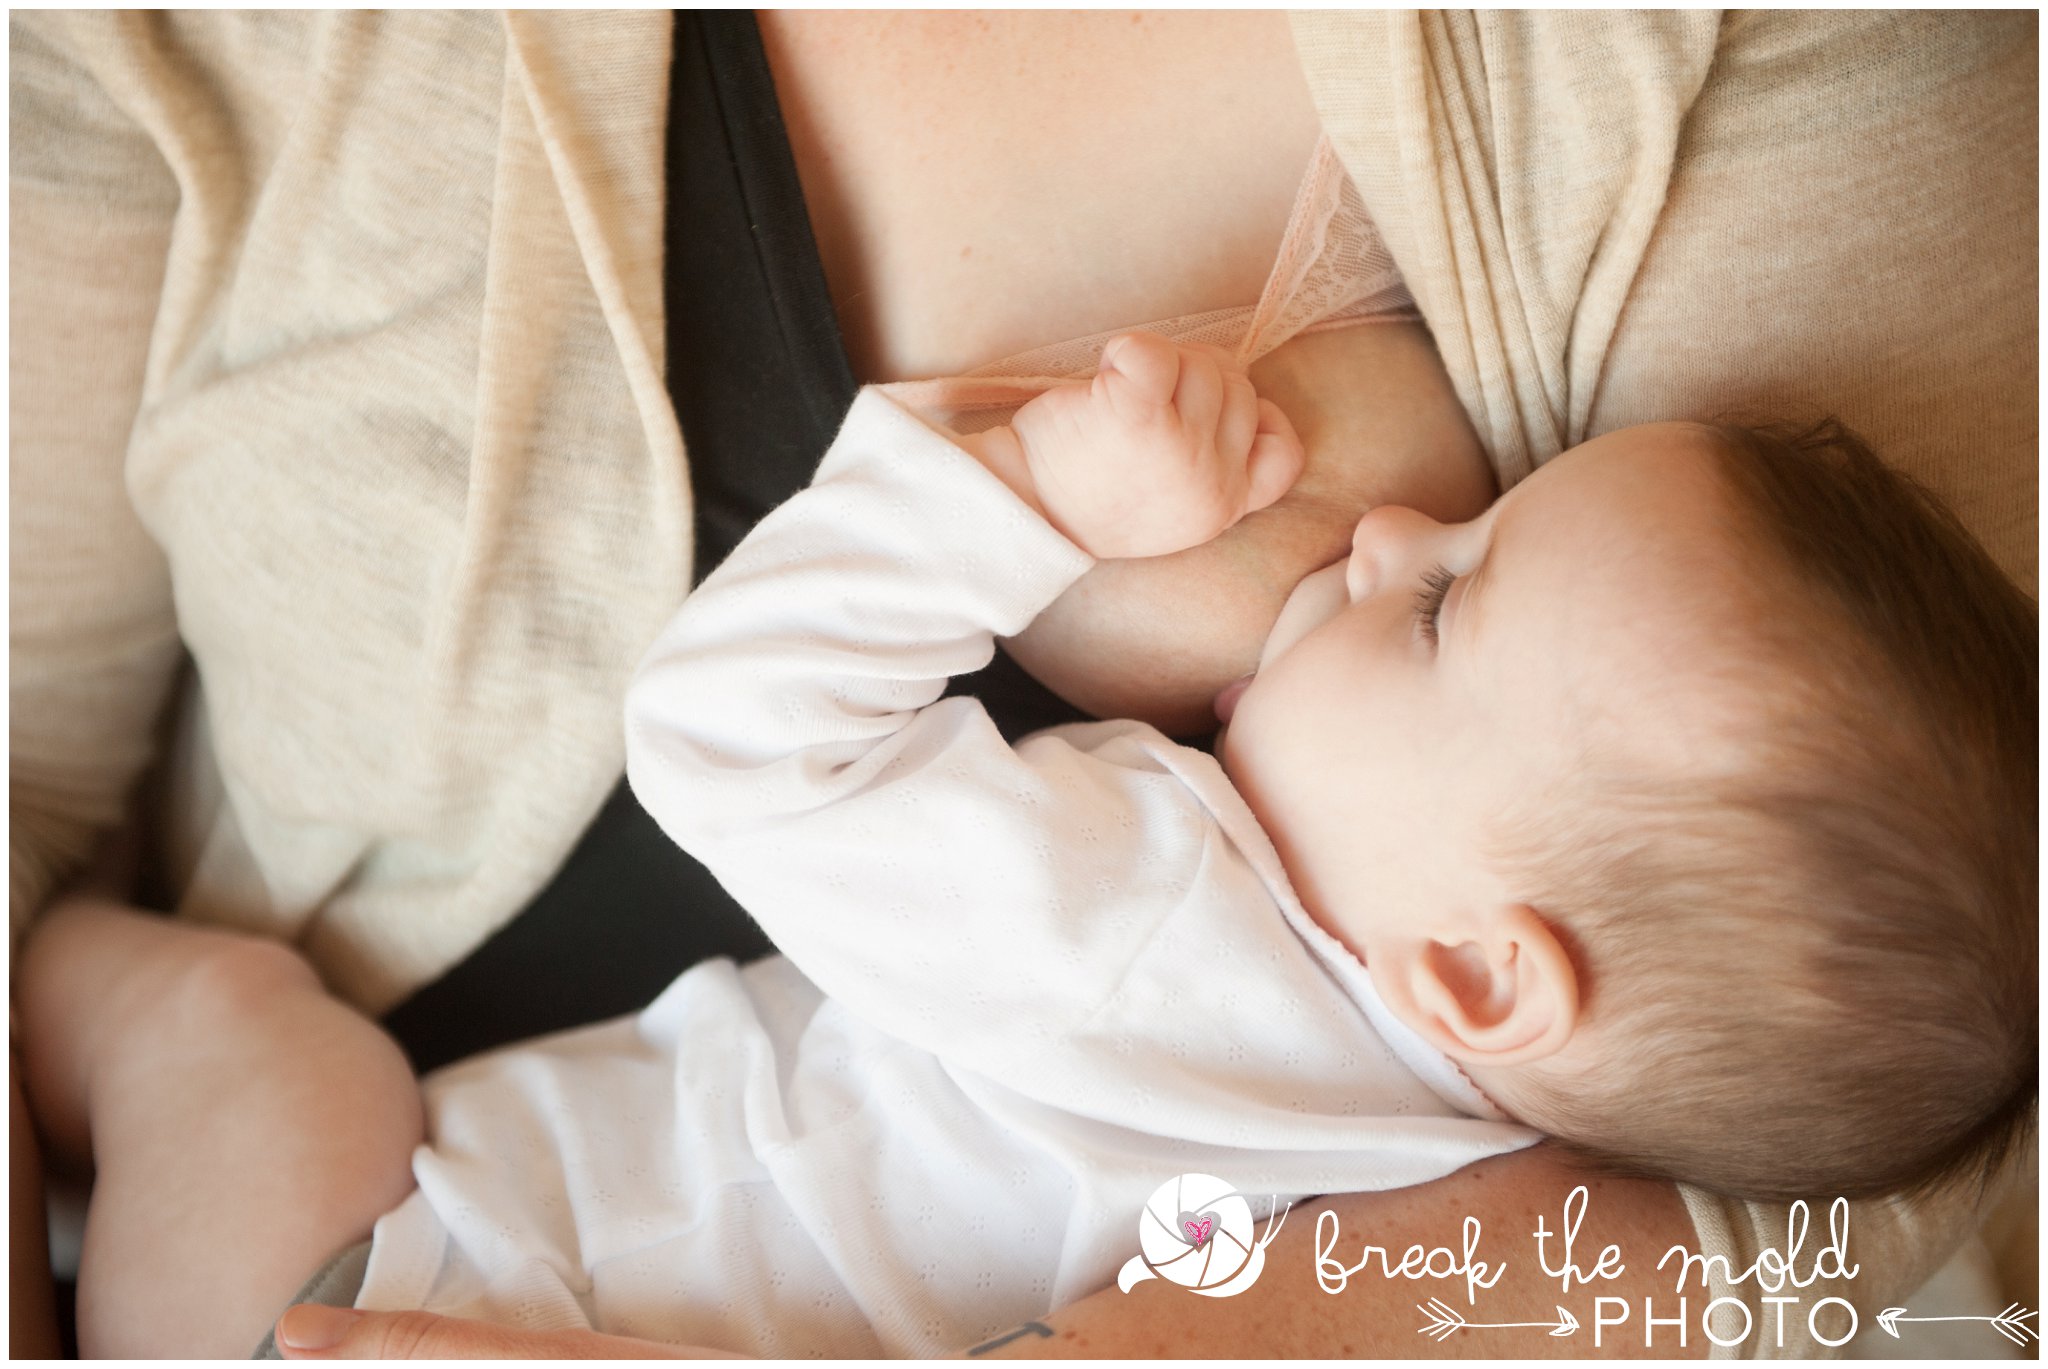 break-the-mold-photo-nursing-body-love-baby-pregnant-women-powerful-breastfeeding-sessions_7198.jpg